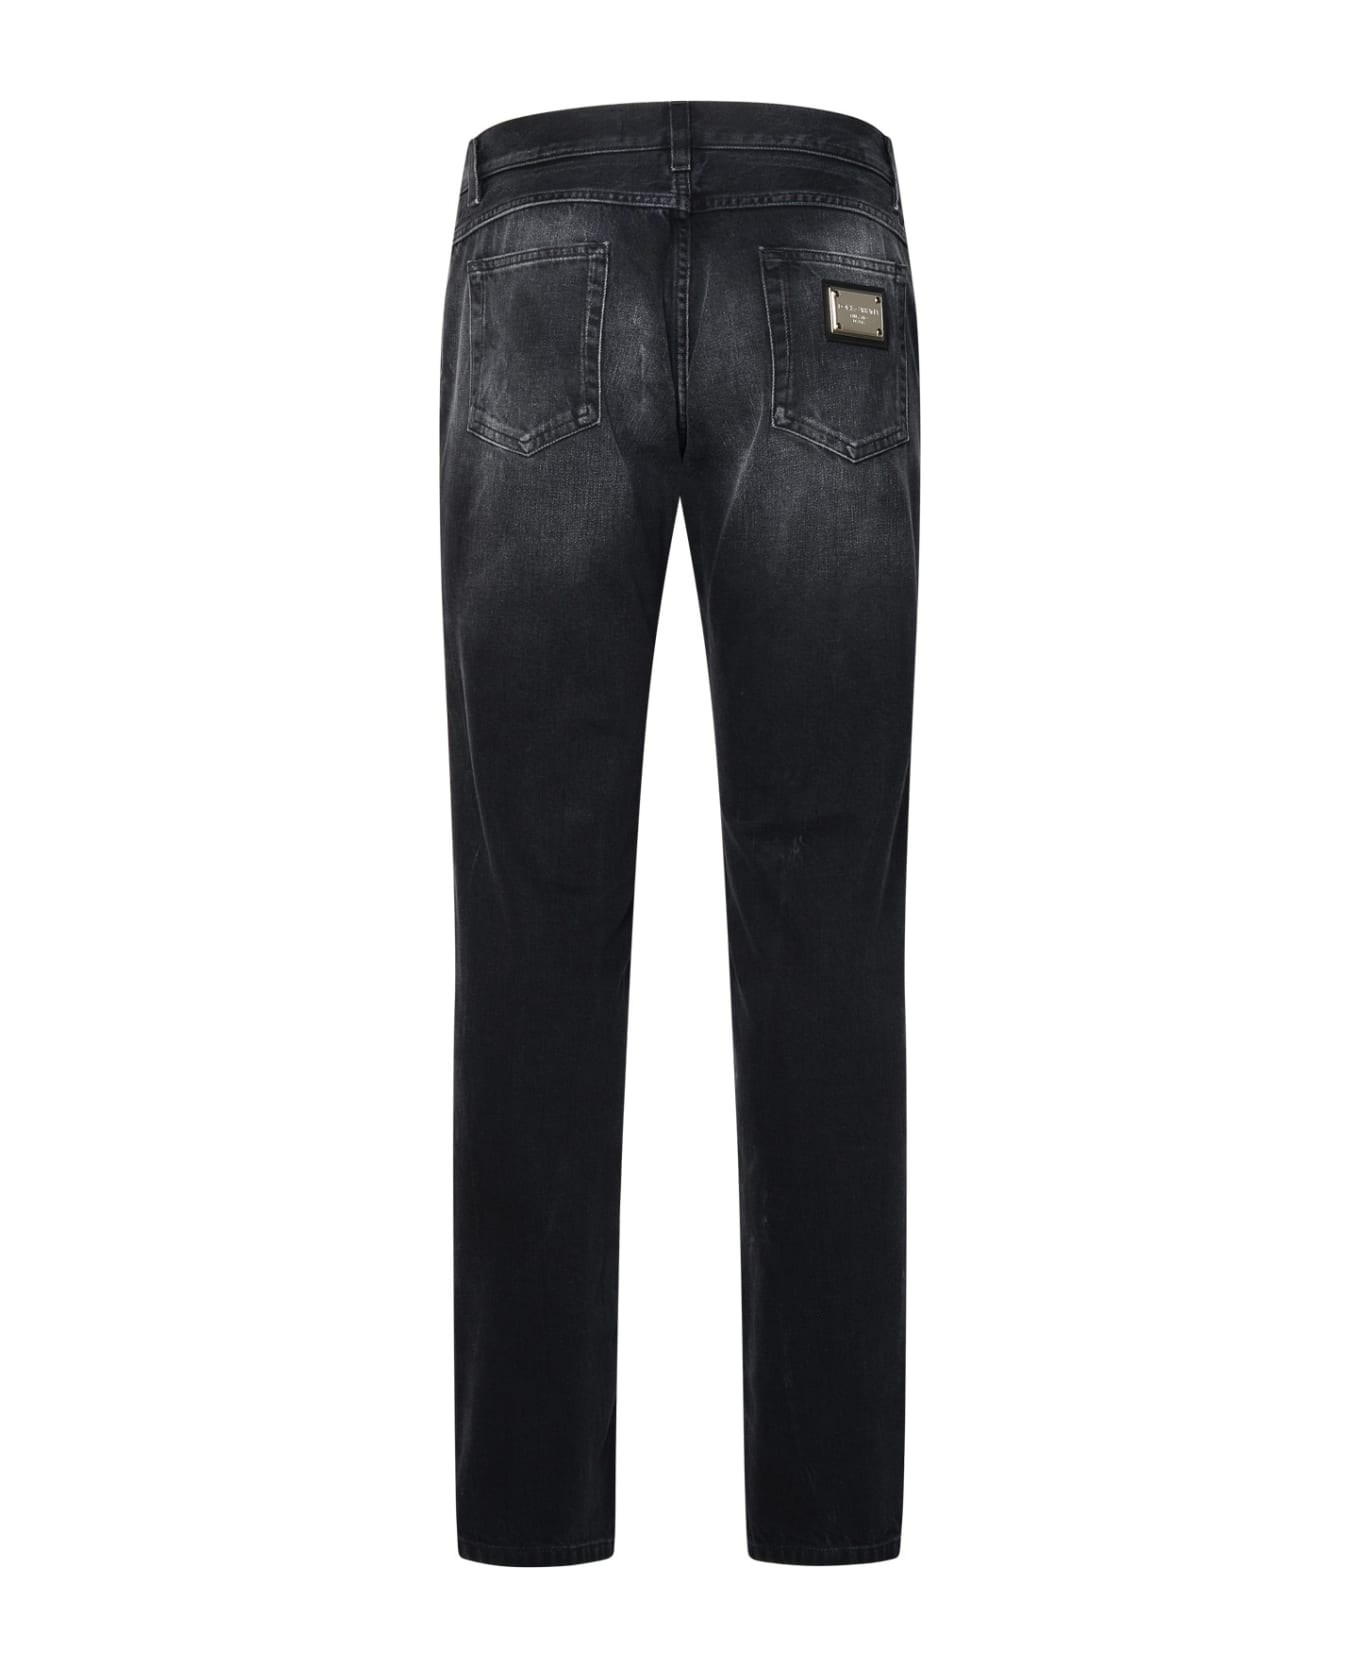 Dolce & Gabbana Black Cotton Jeans - Black デニム